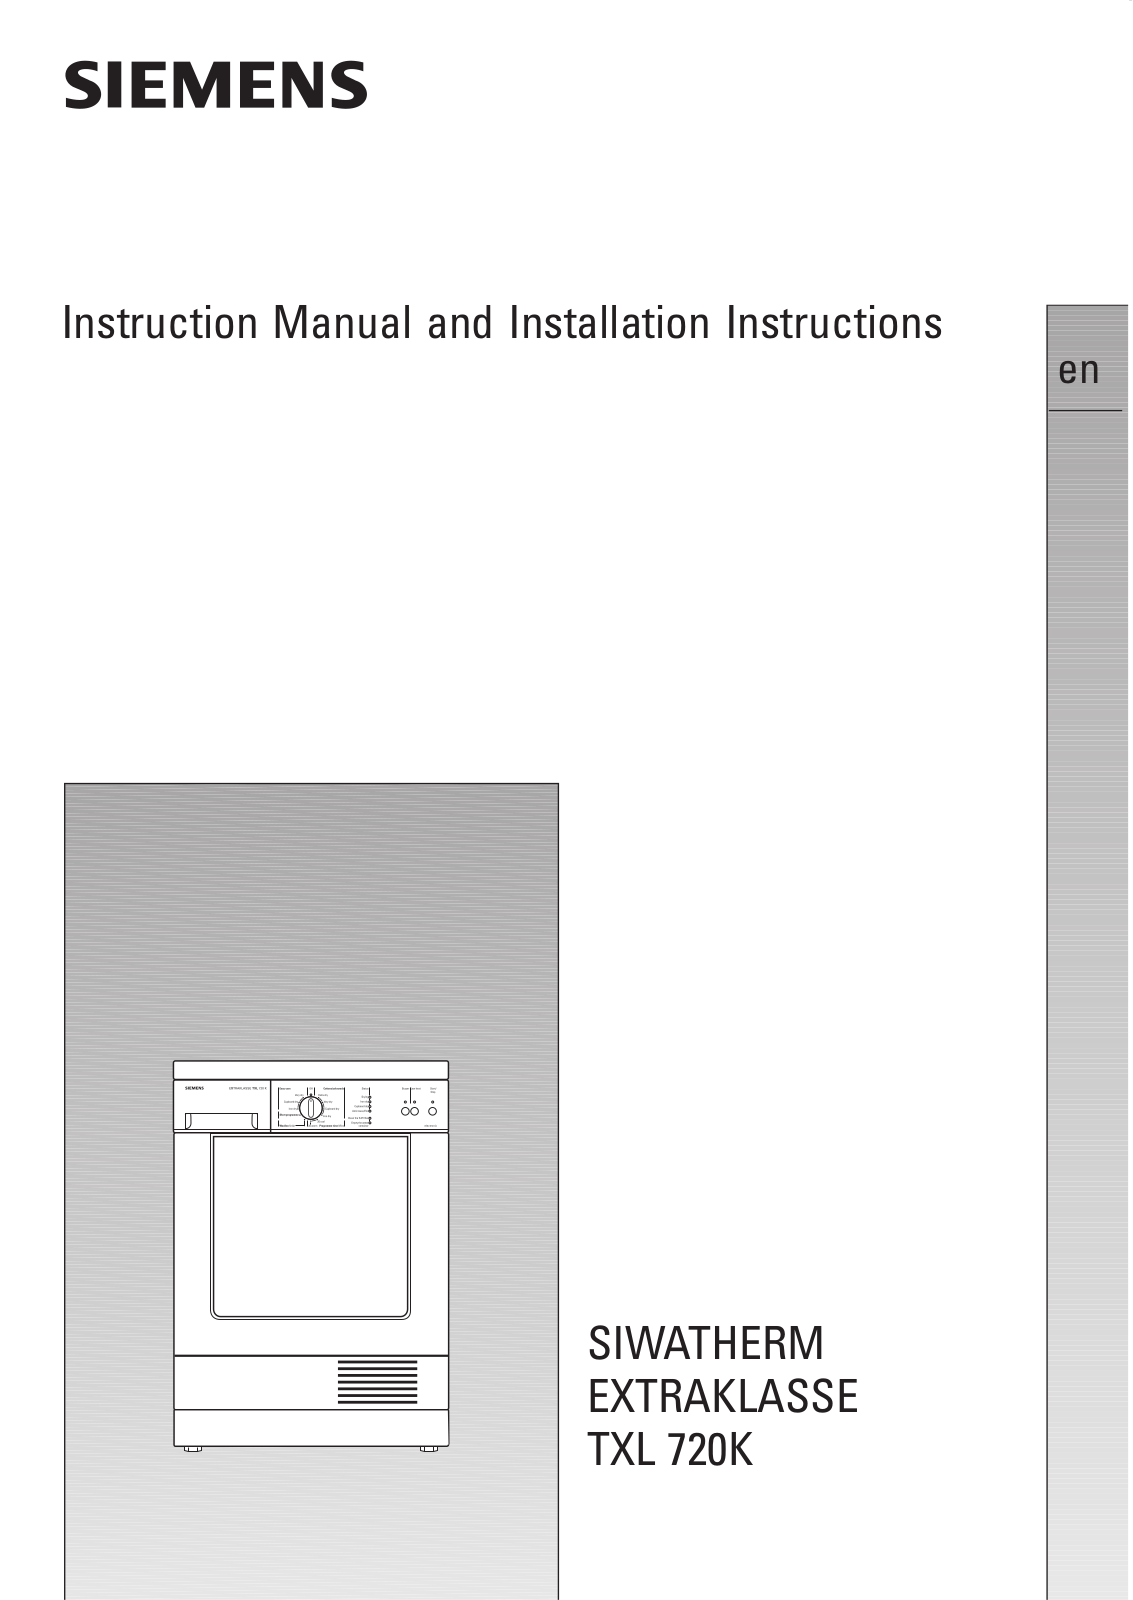 Siemens TXL720K Instructions Manual